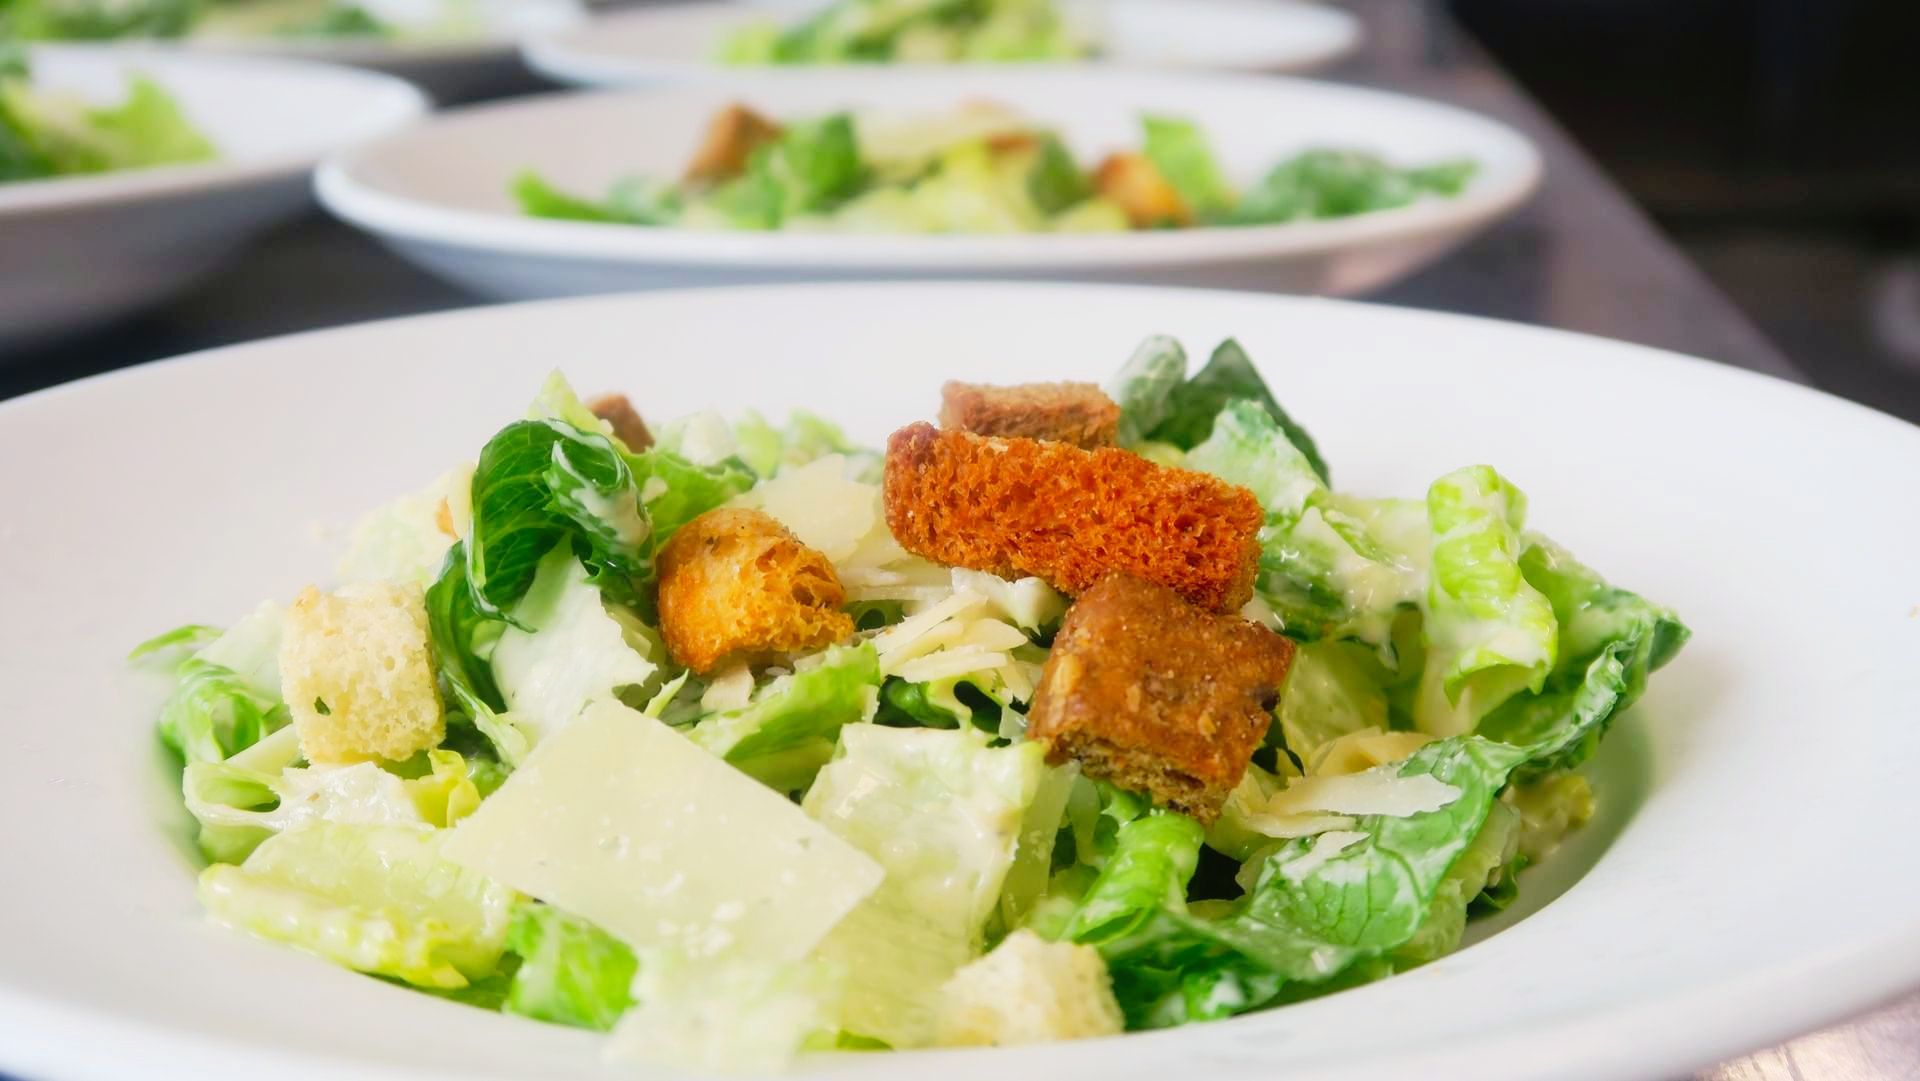 Caesar Salad with Parmesan Croutons